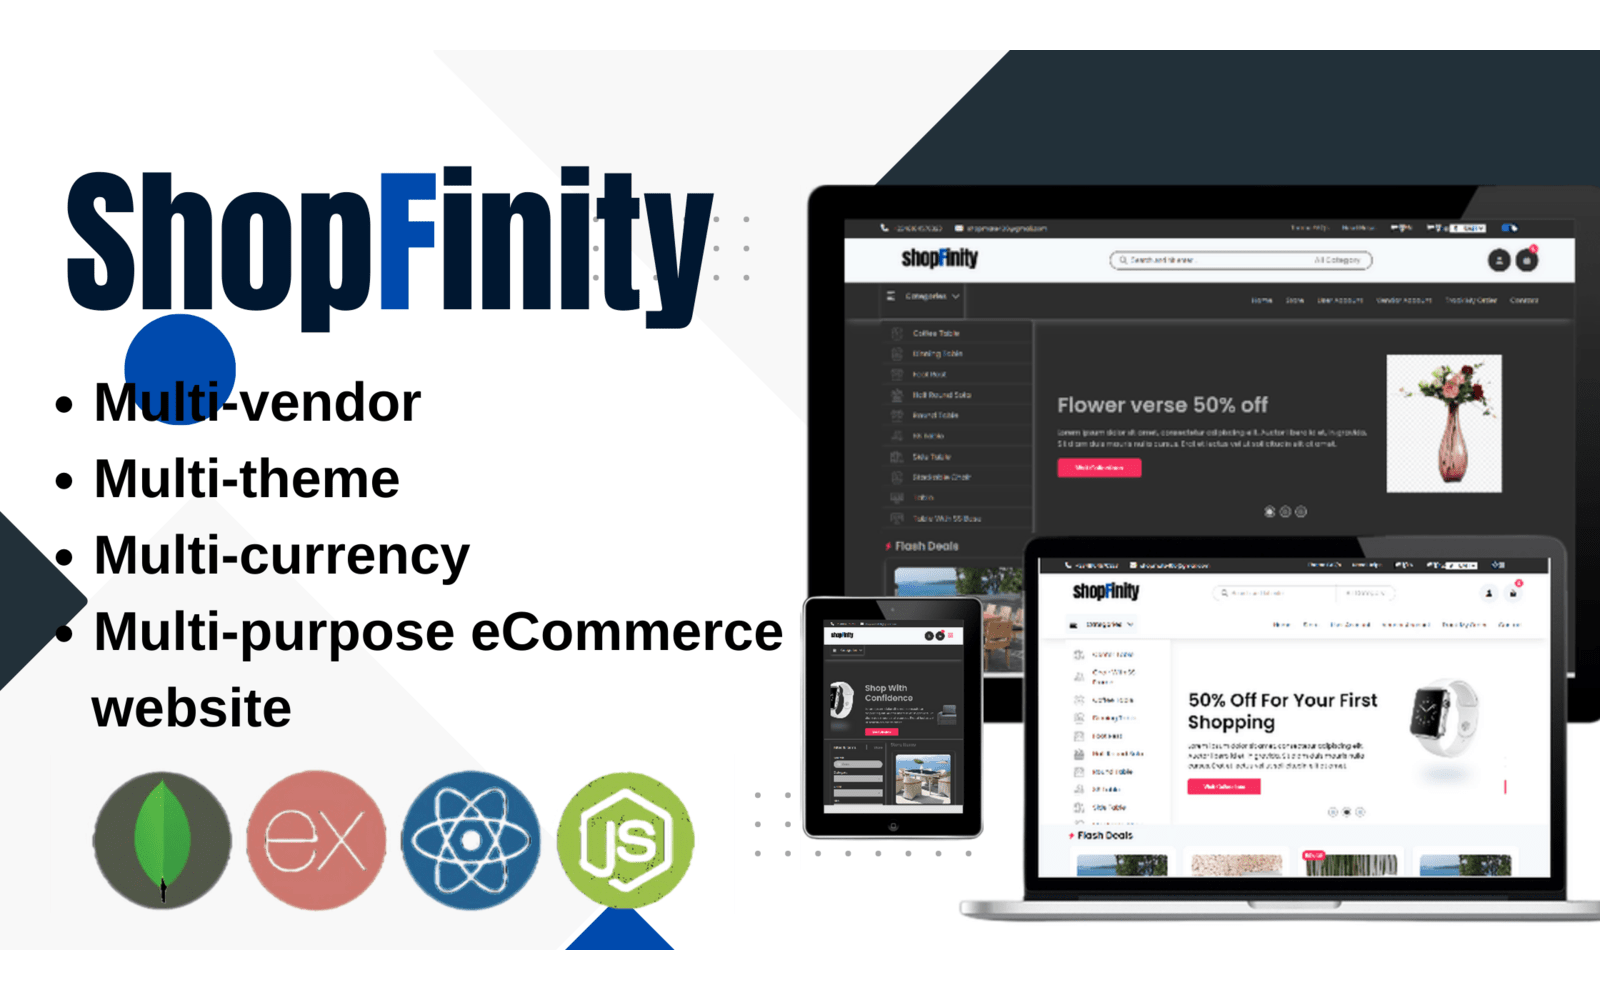 ShopFinity multipurpose eCommerce website